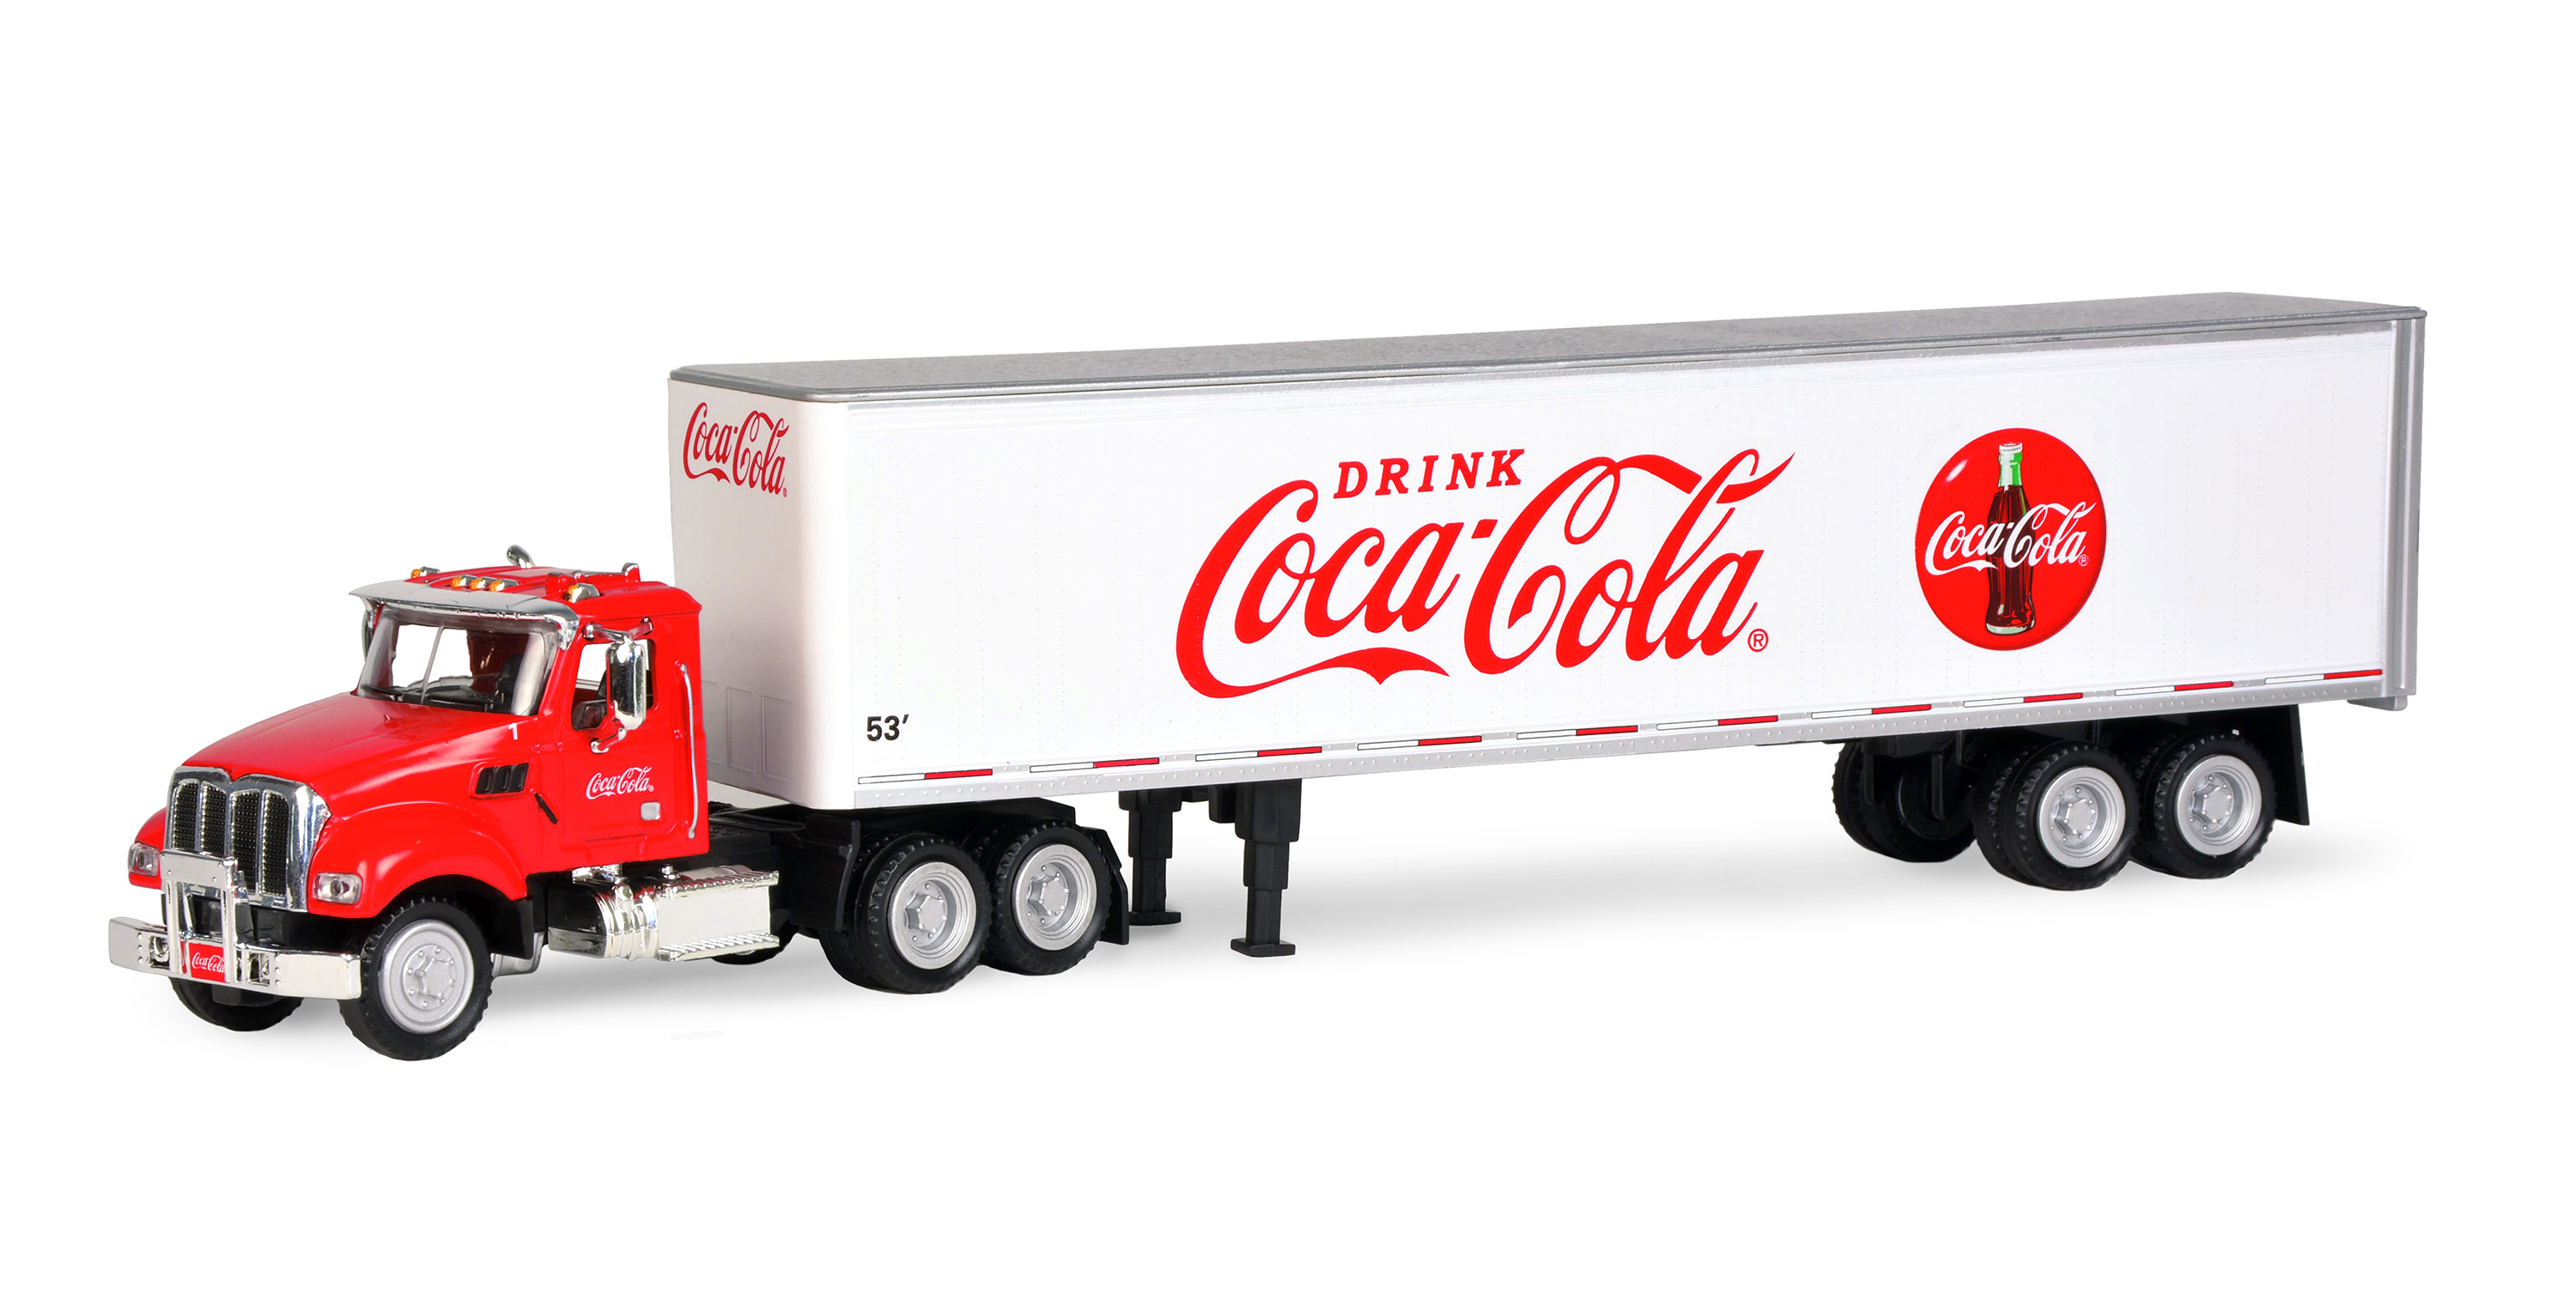 Coca-Cola 1/50 53' Coca-Cola Tractor and Trailer Collectible Toy Vehicle - image 1 of 3